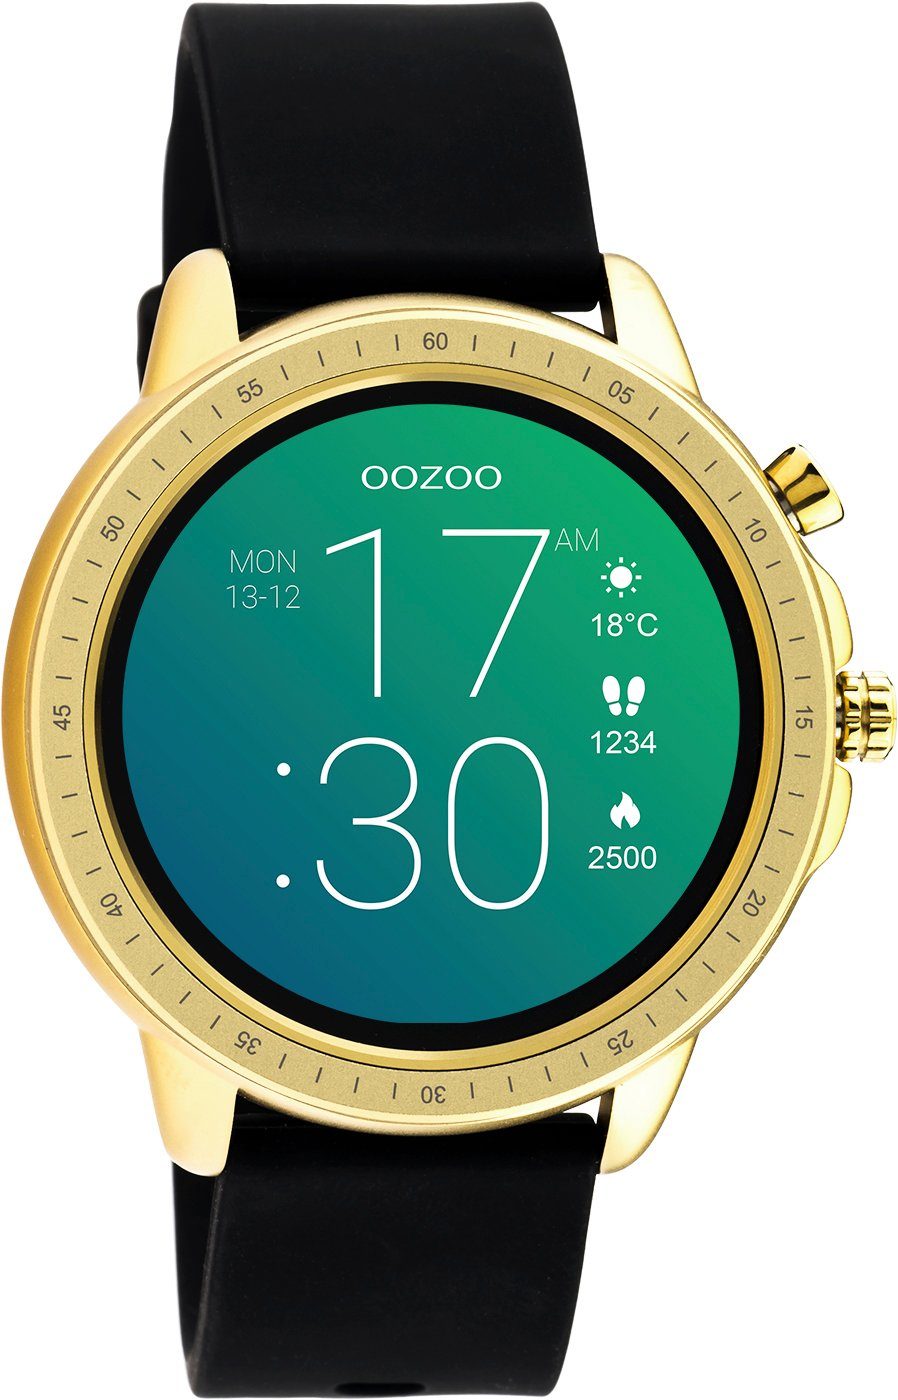 Q00301 mm 45 Armbanduhr Goldfarben OOZOO Smartwatch Schwarz Silikonband